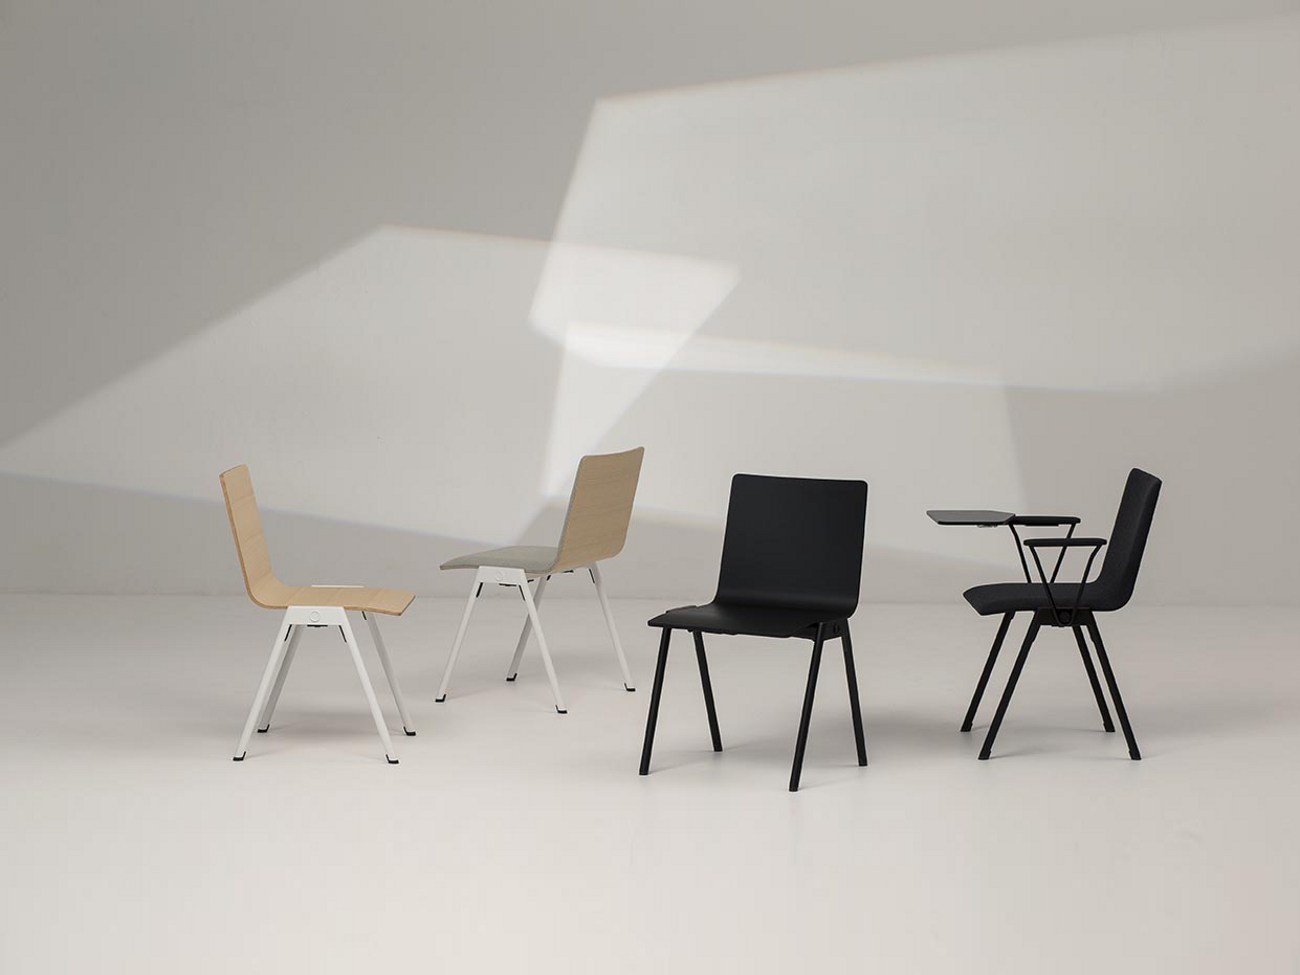 Chromis Chairs by Kensaku Oshiro for Debi